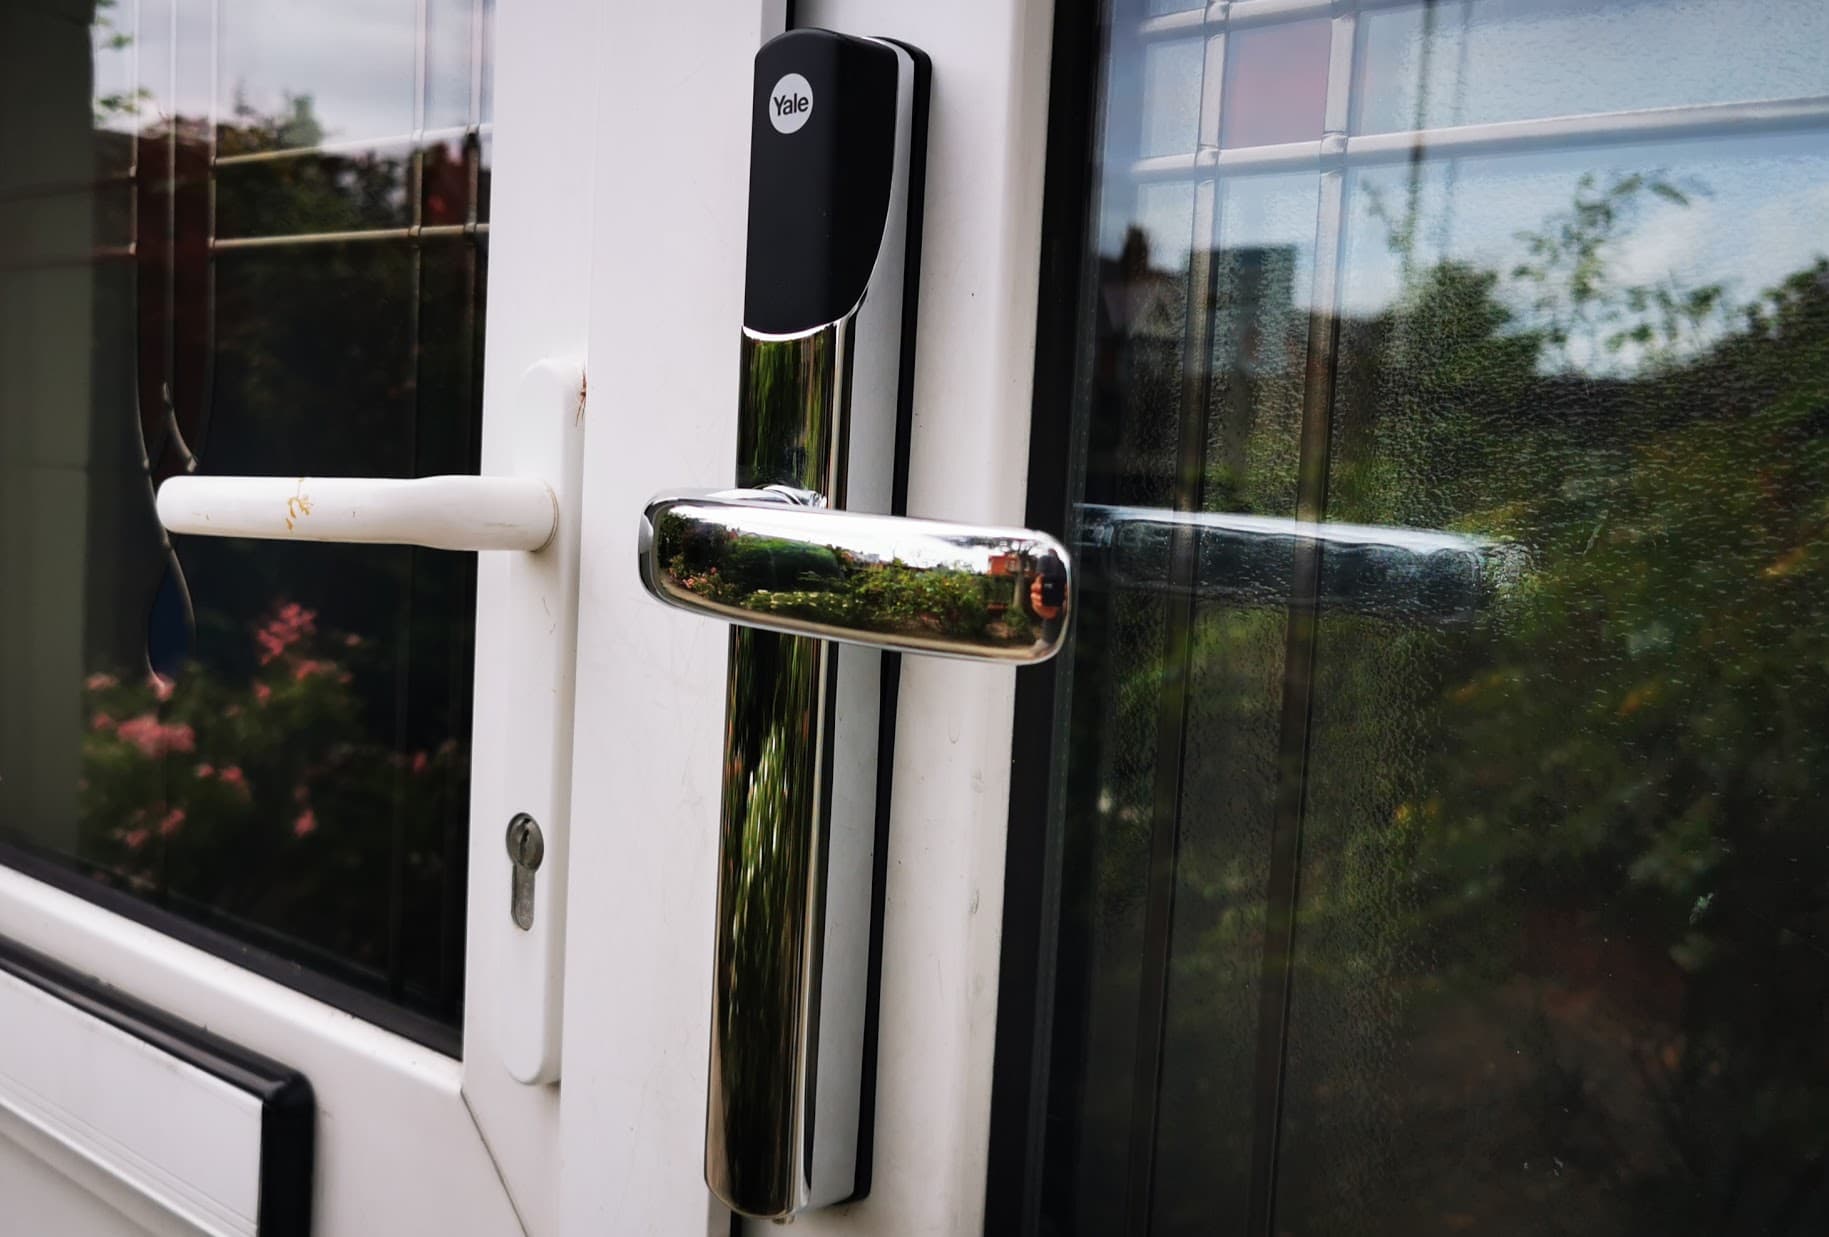 The Best Smart Locks for uPVC External Doors With Multi-Point Locks in the UK